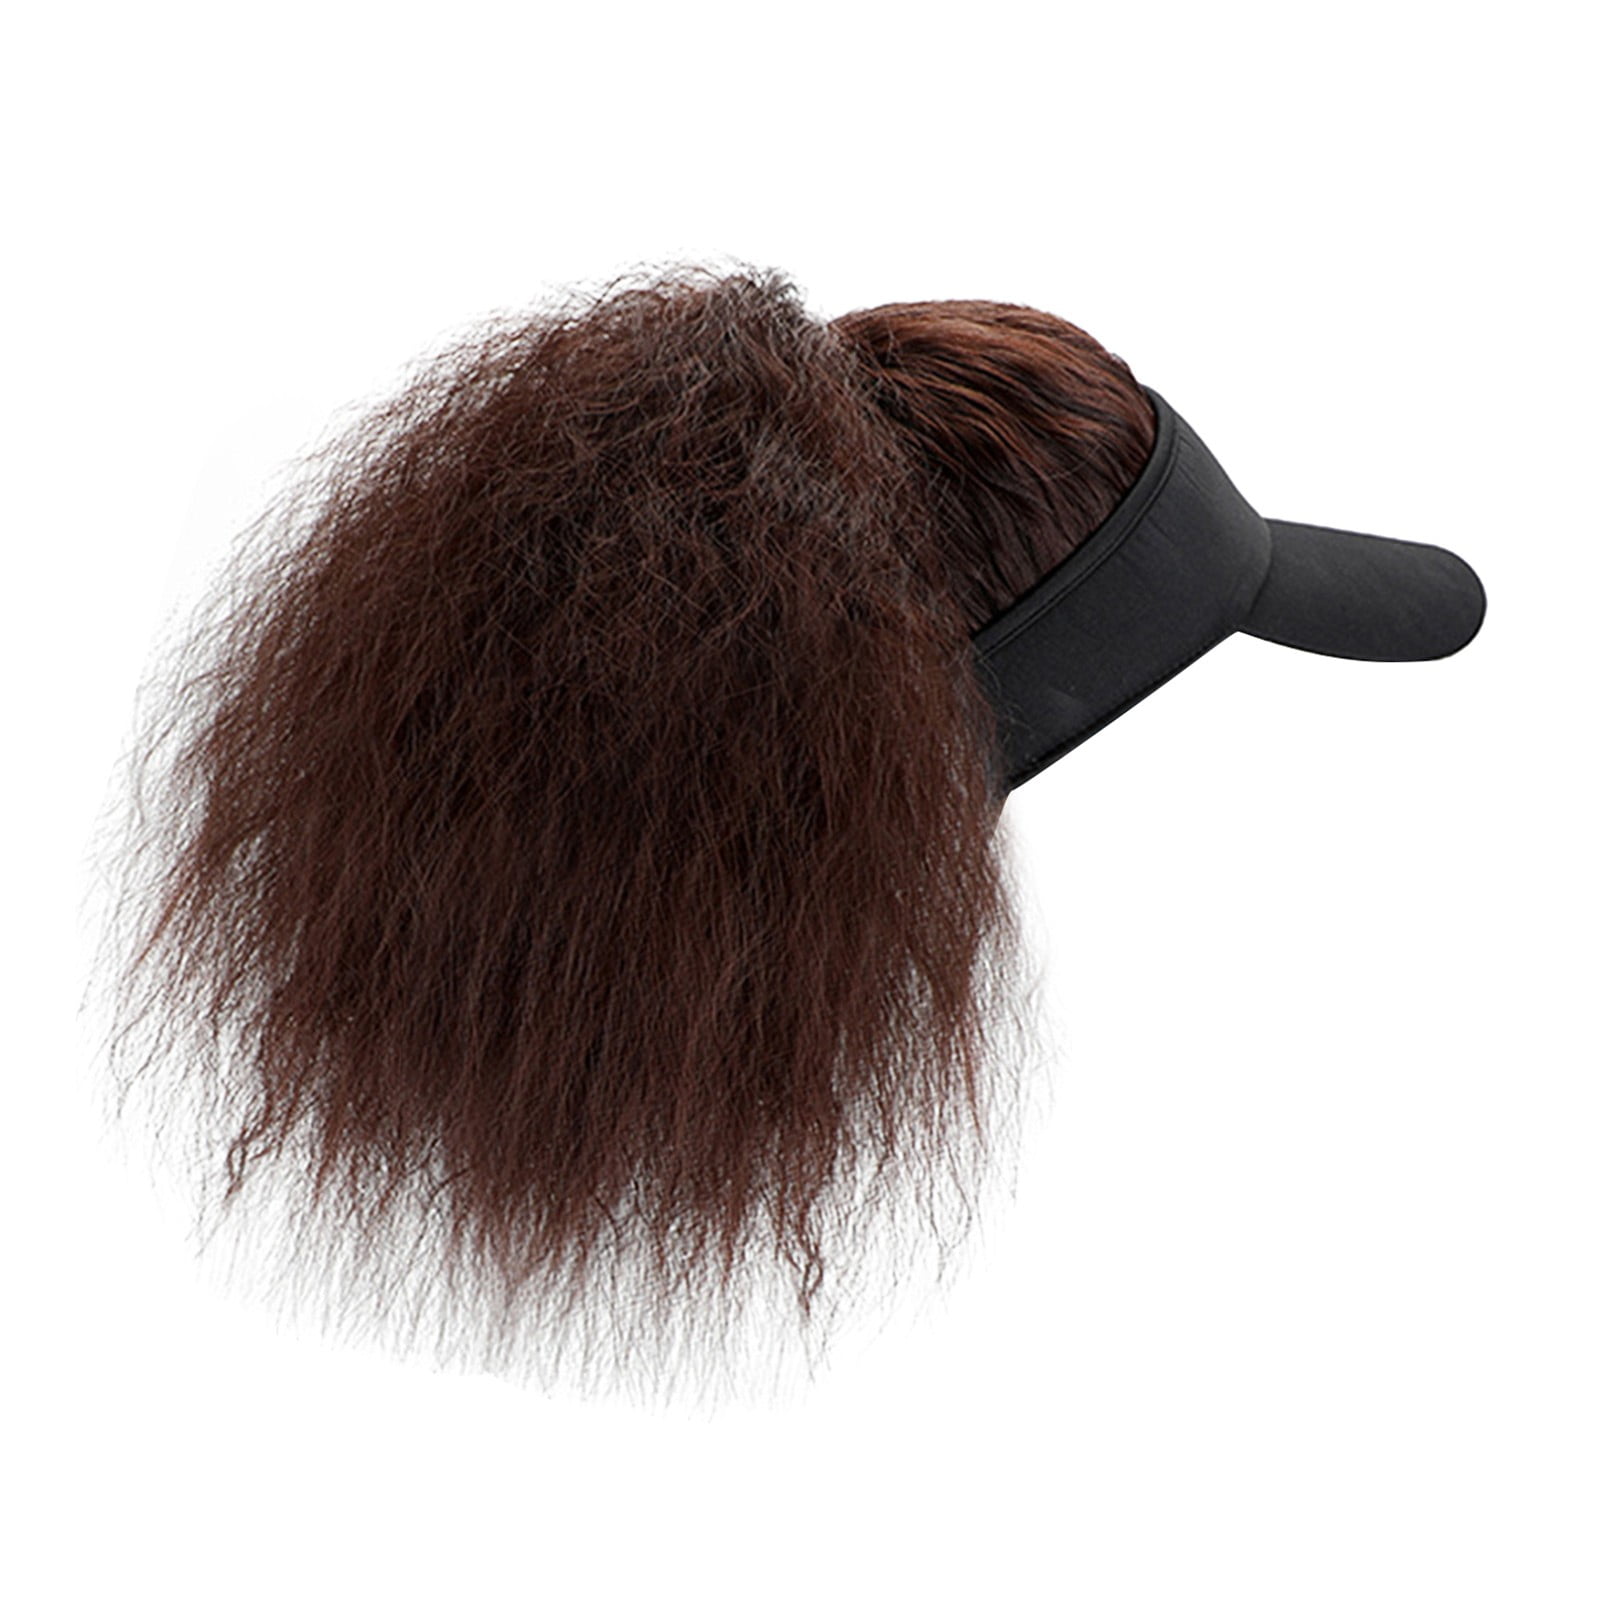 1 pc Black Crochet Wig Cap Headband Wig Cap with Adjustable Headband Big  Hole Weaving Wig Base for Wig Making